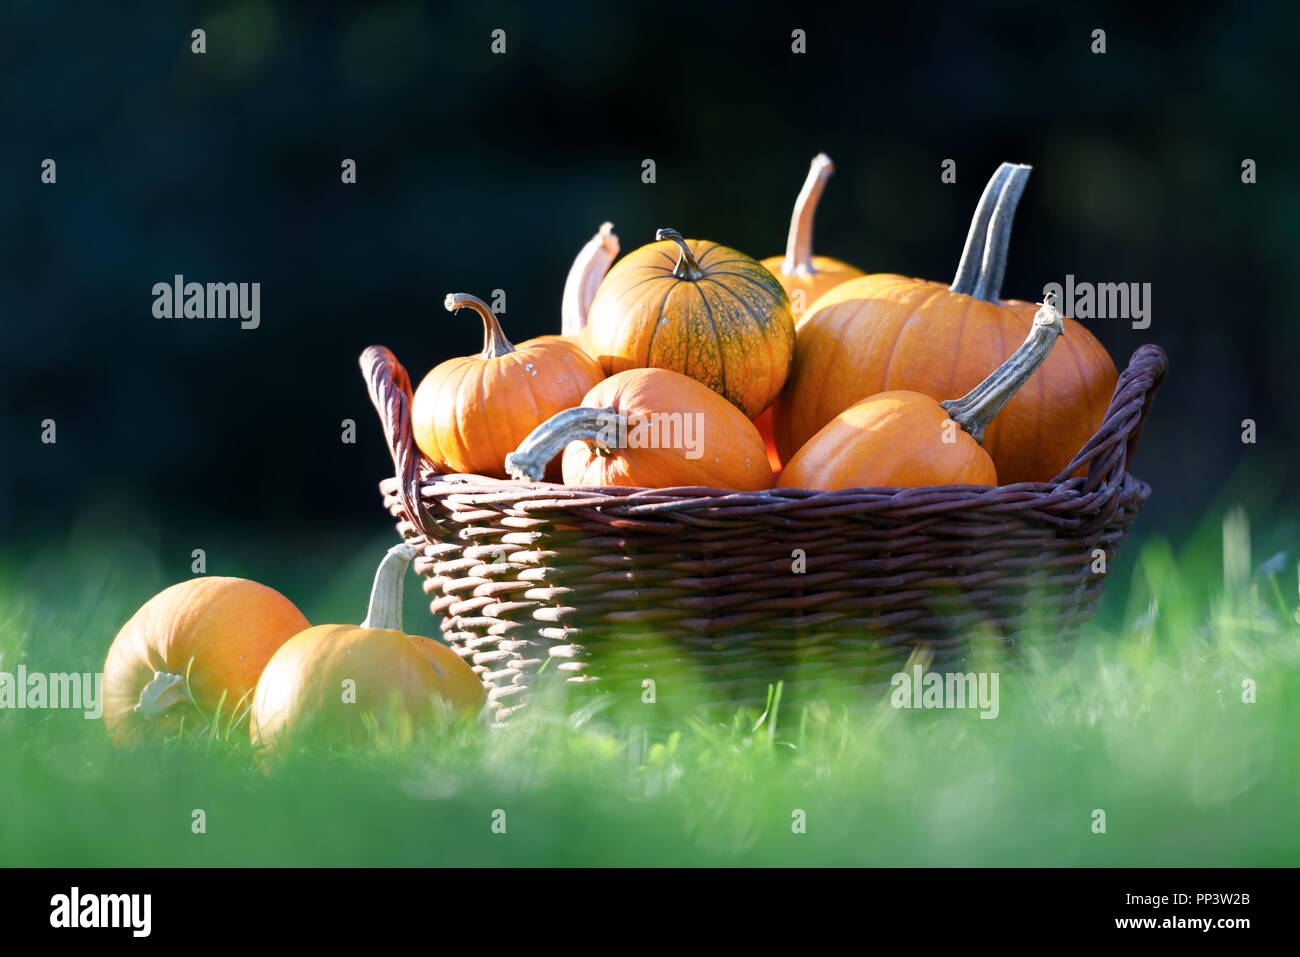 Different kind of pumpkins in garden basket. Halloween and autumn background Stock Photo